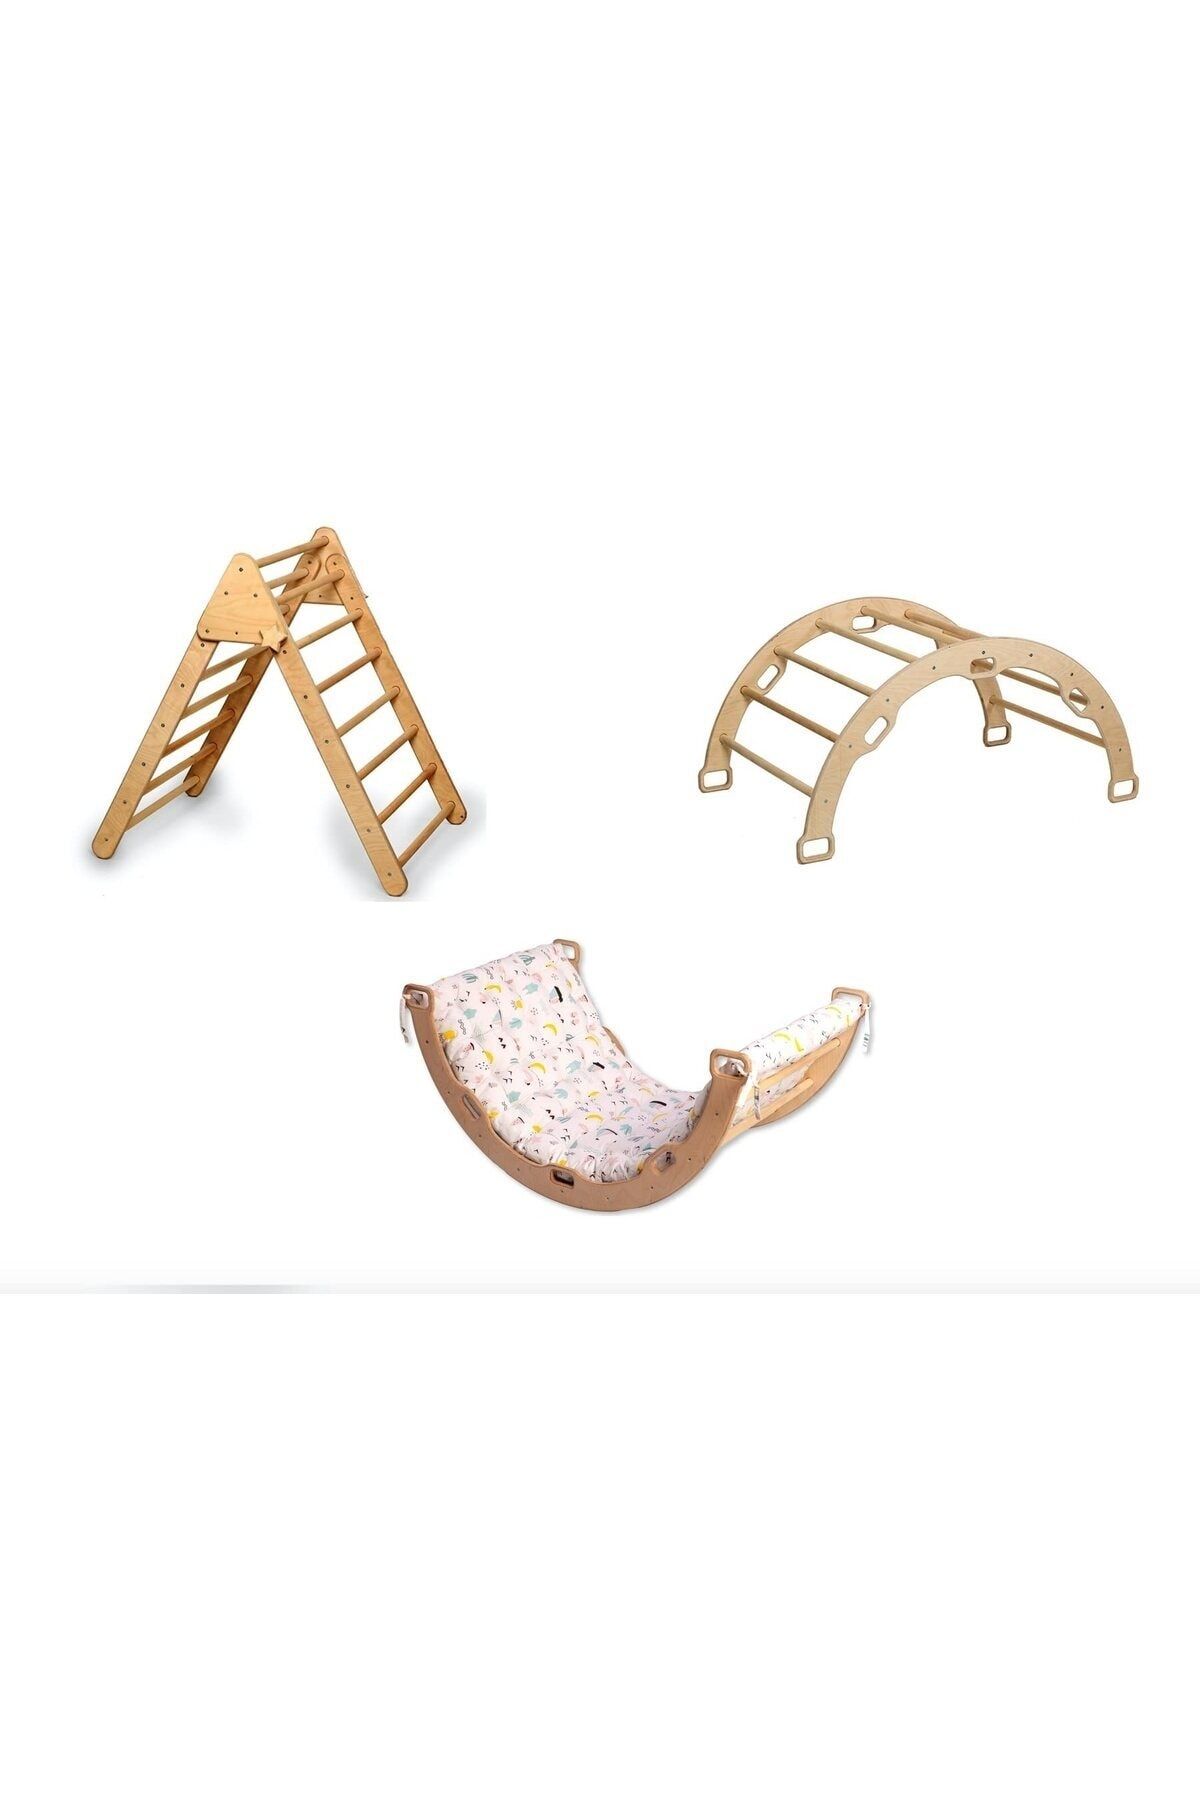 KIDOPPO Pikler Tırmanma Seti | ahşap Montessori Oyun Set Ve Aktivite Merkezi | Üçgen Kemer Flamingo Yastık